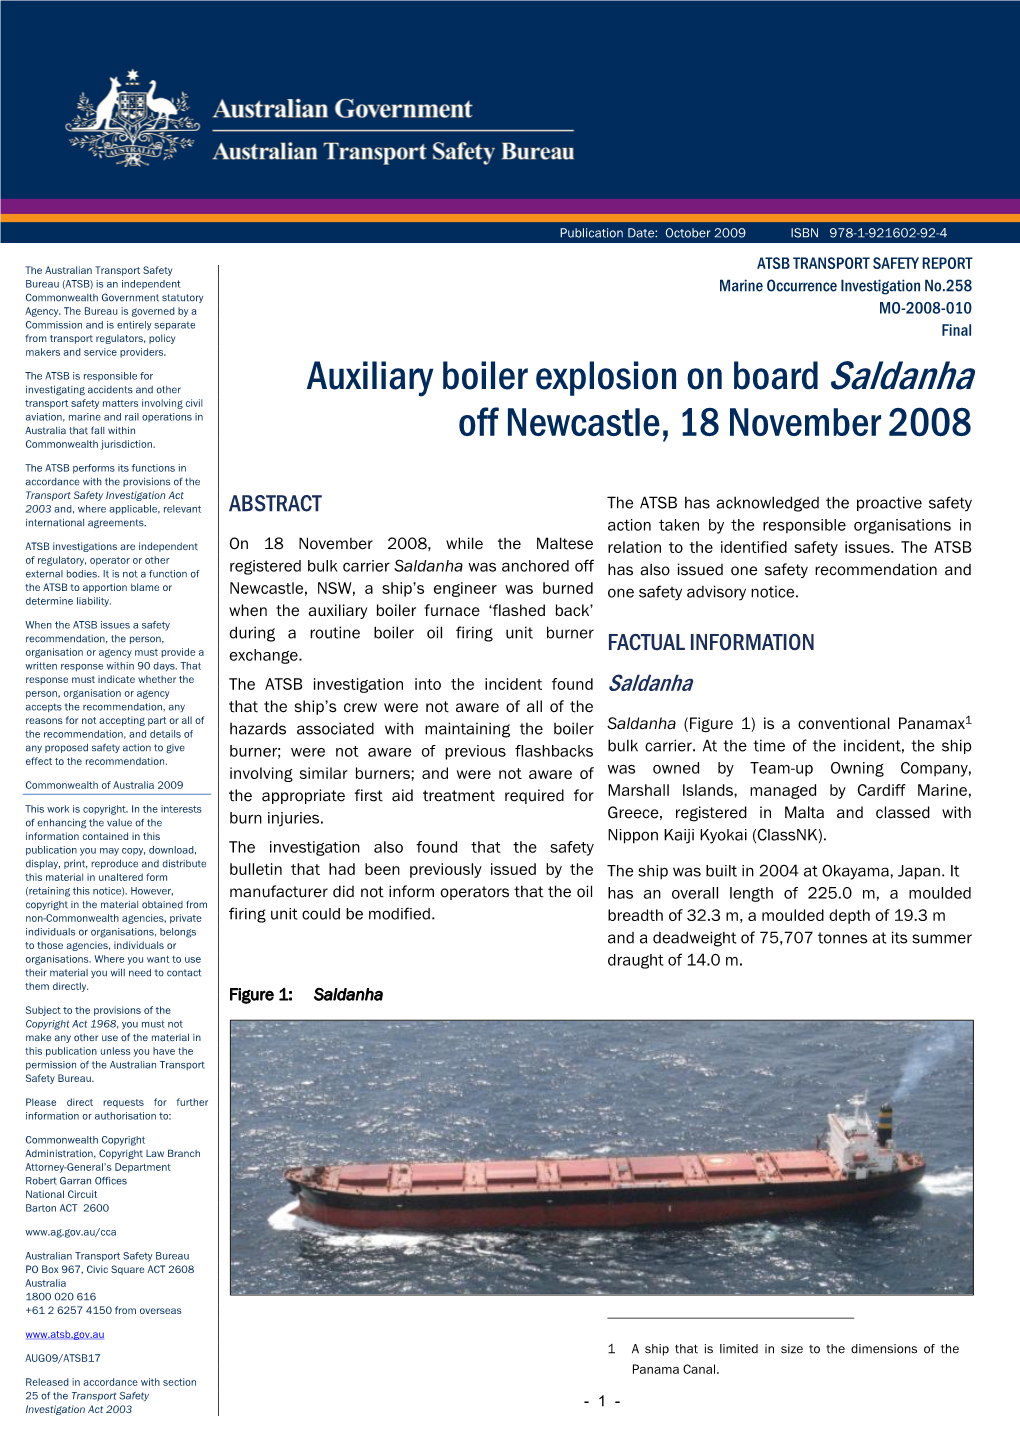 Auxiliary Boiler Explosion on Board Saldanha Off Newcastle, 18